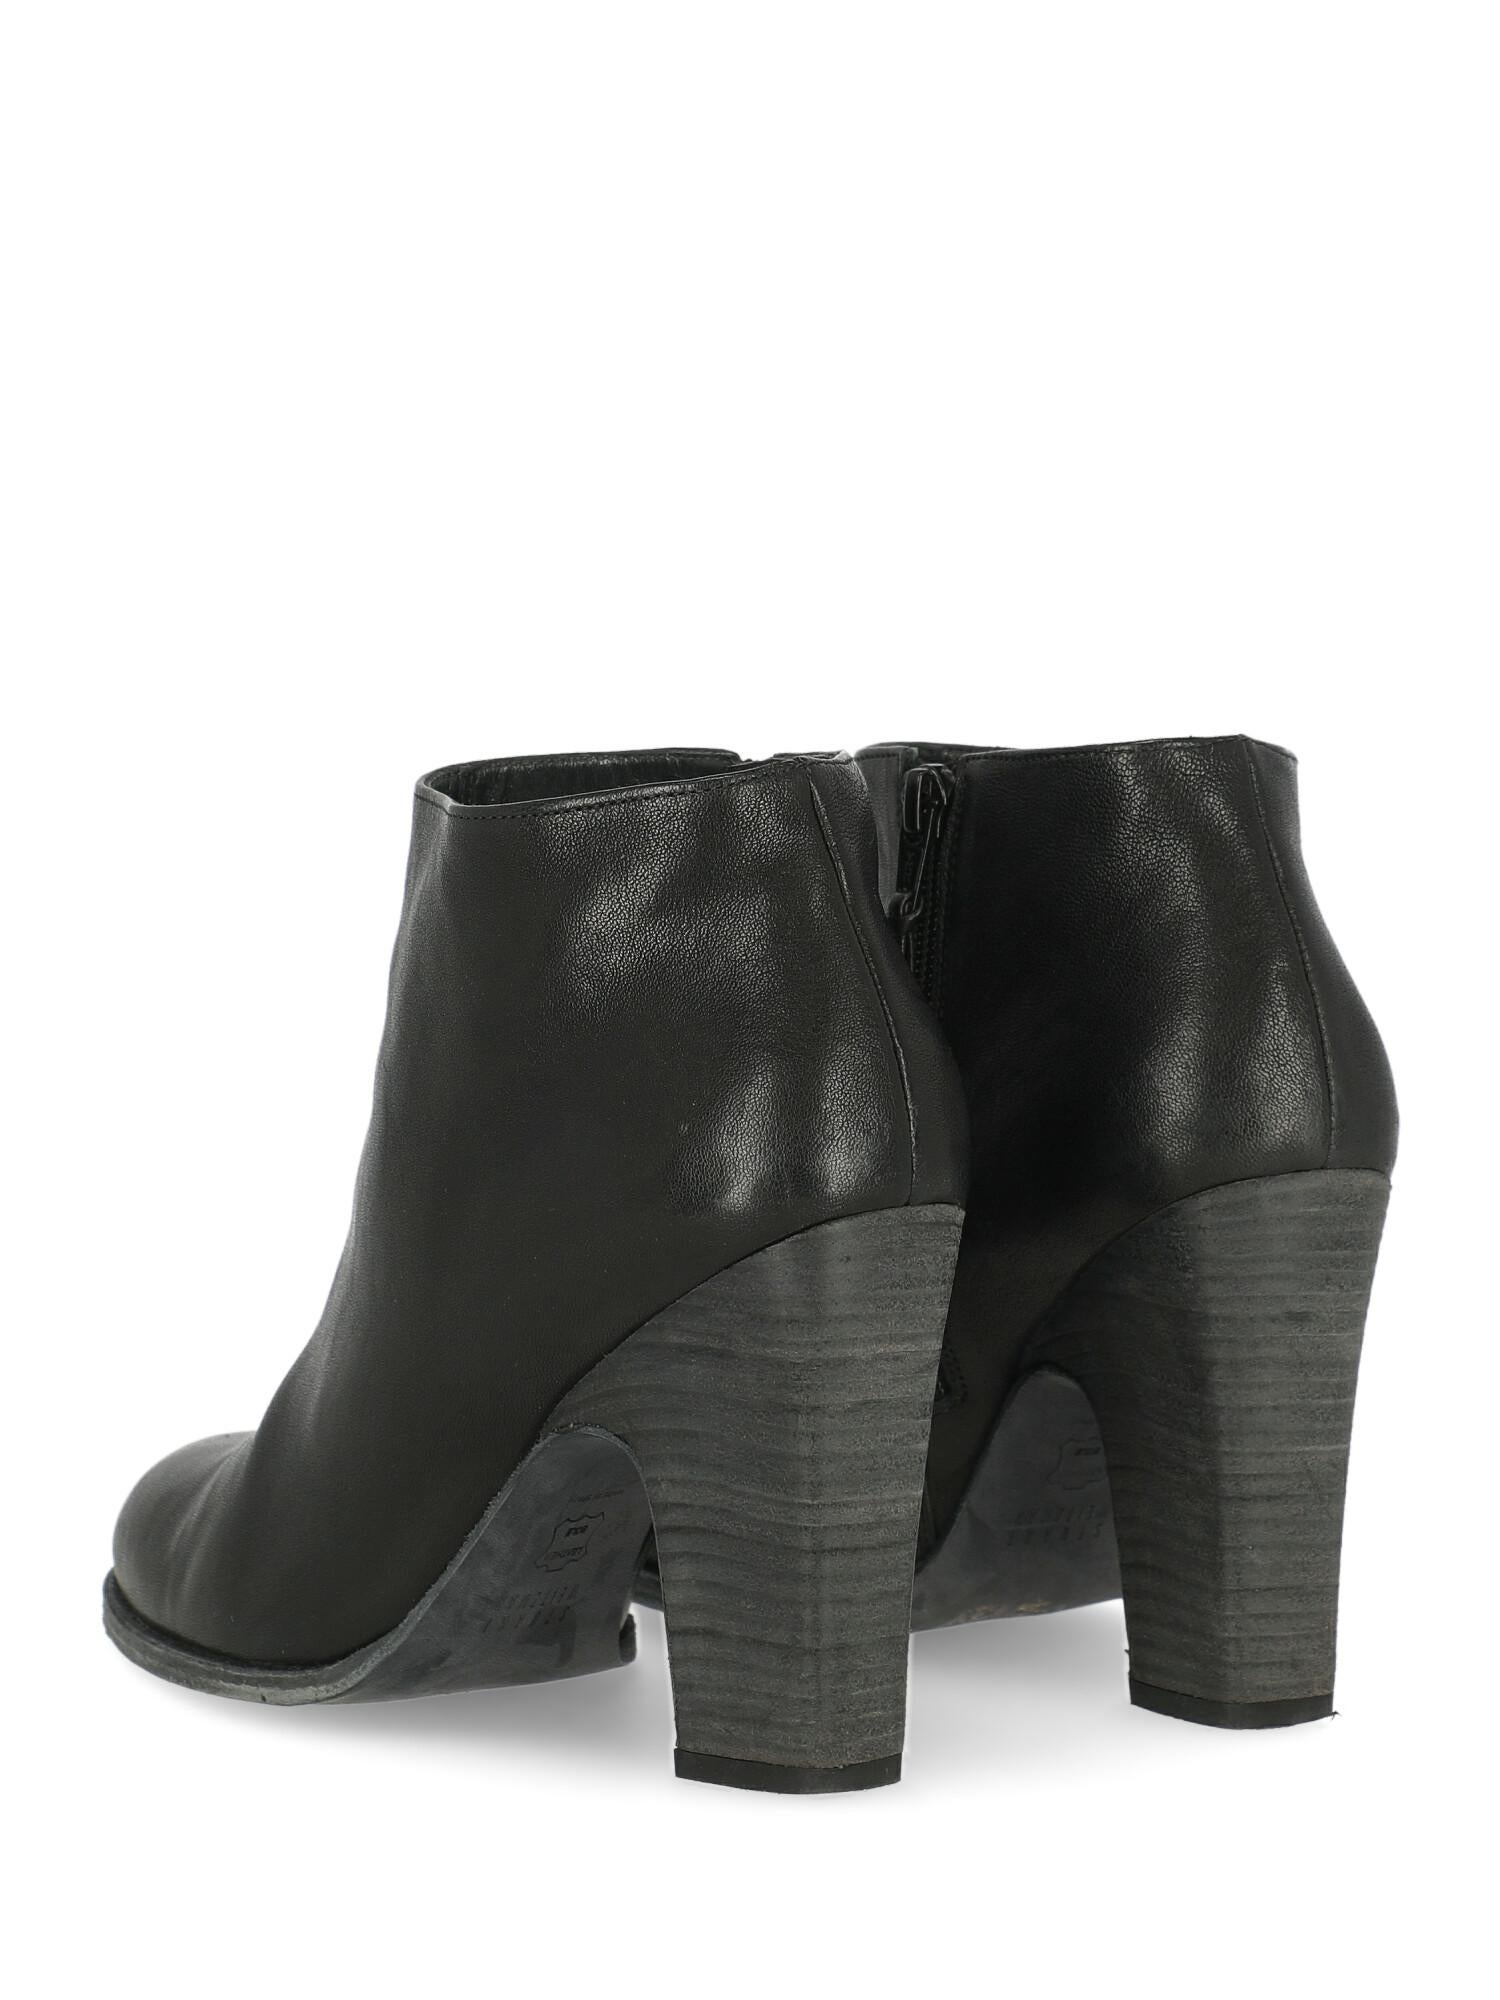 Women's Stuart Weitzman Woman Ankle boots Black Leather IT 39.5 For Sale